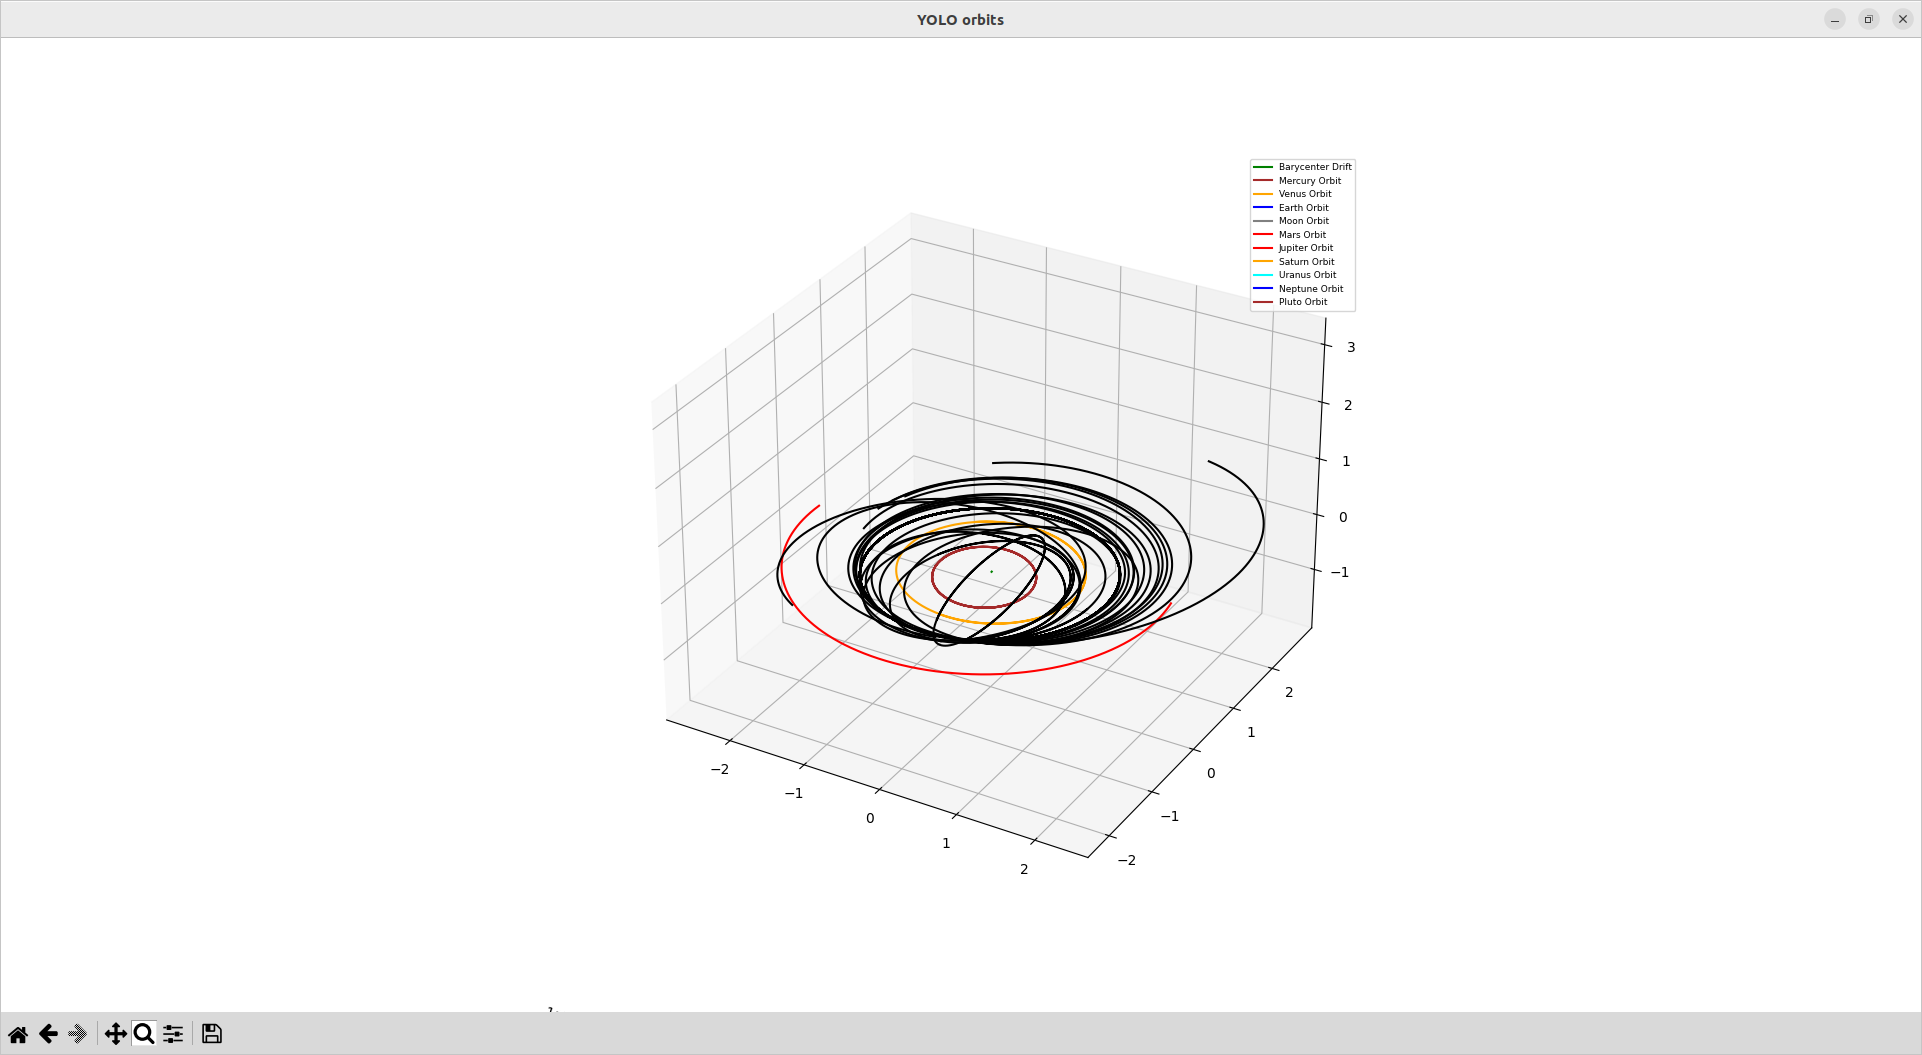 example image of random orbits